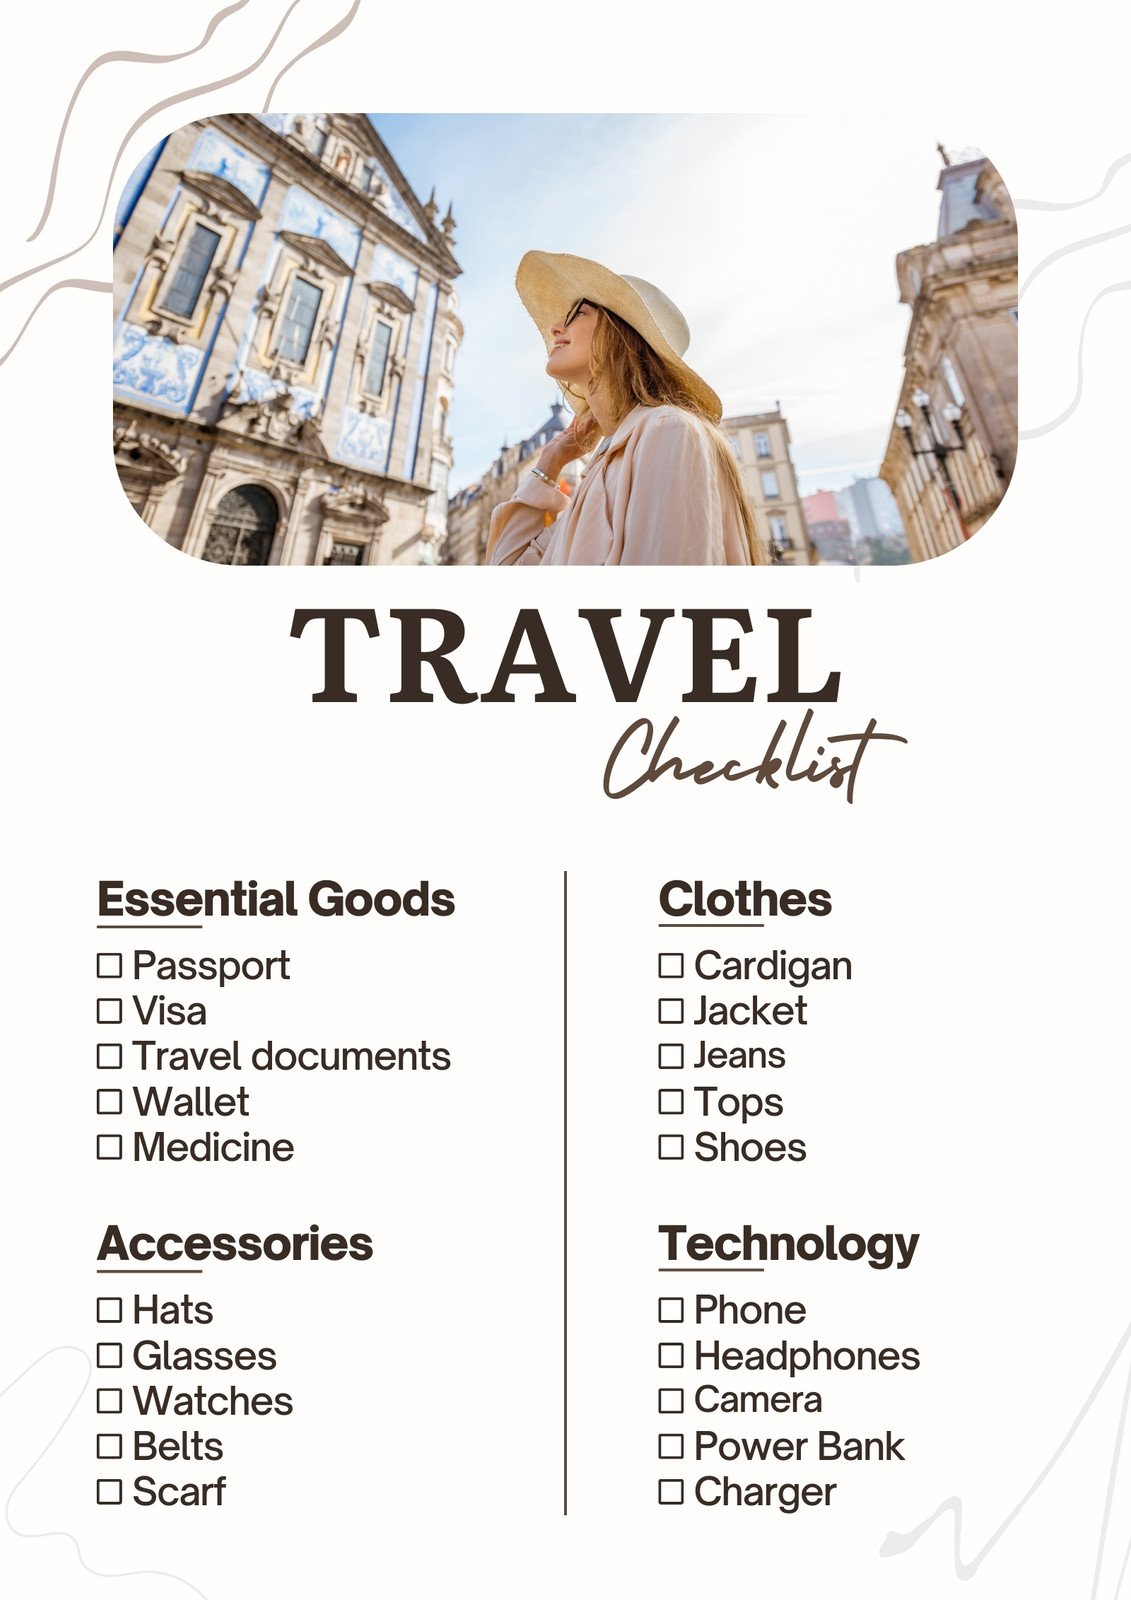 Customize 68+ Travel Checklist Templates Online - Canva